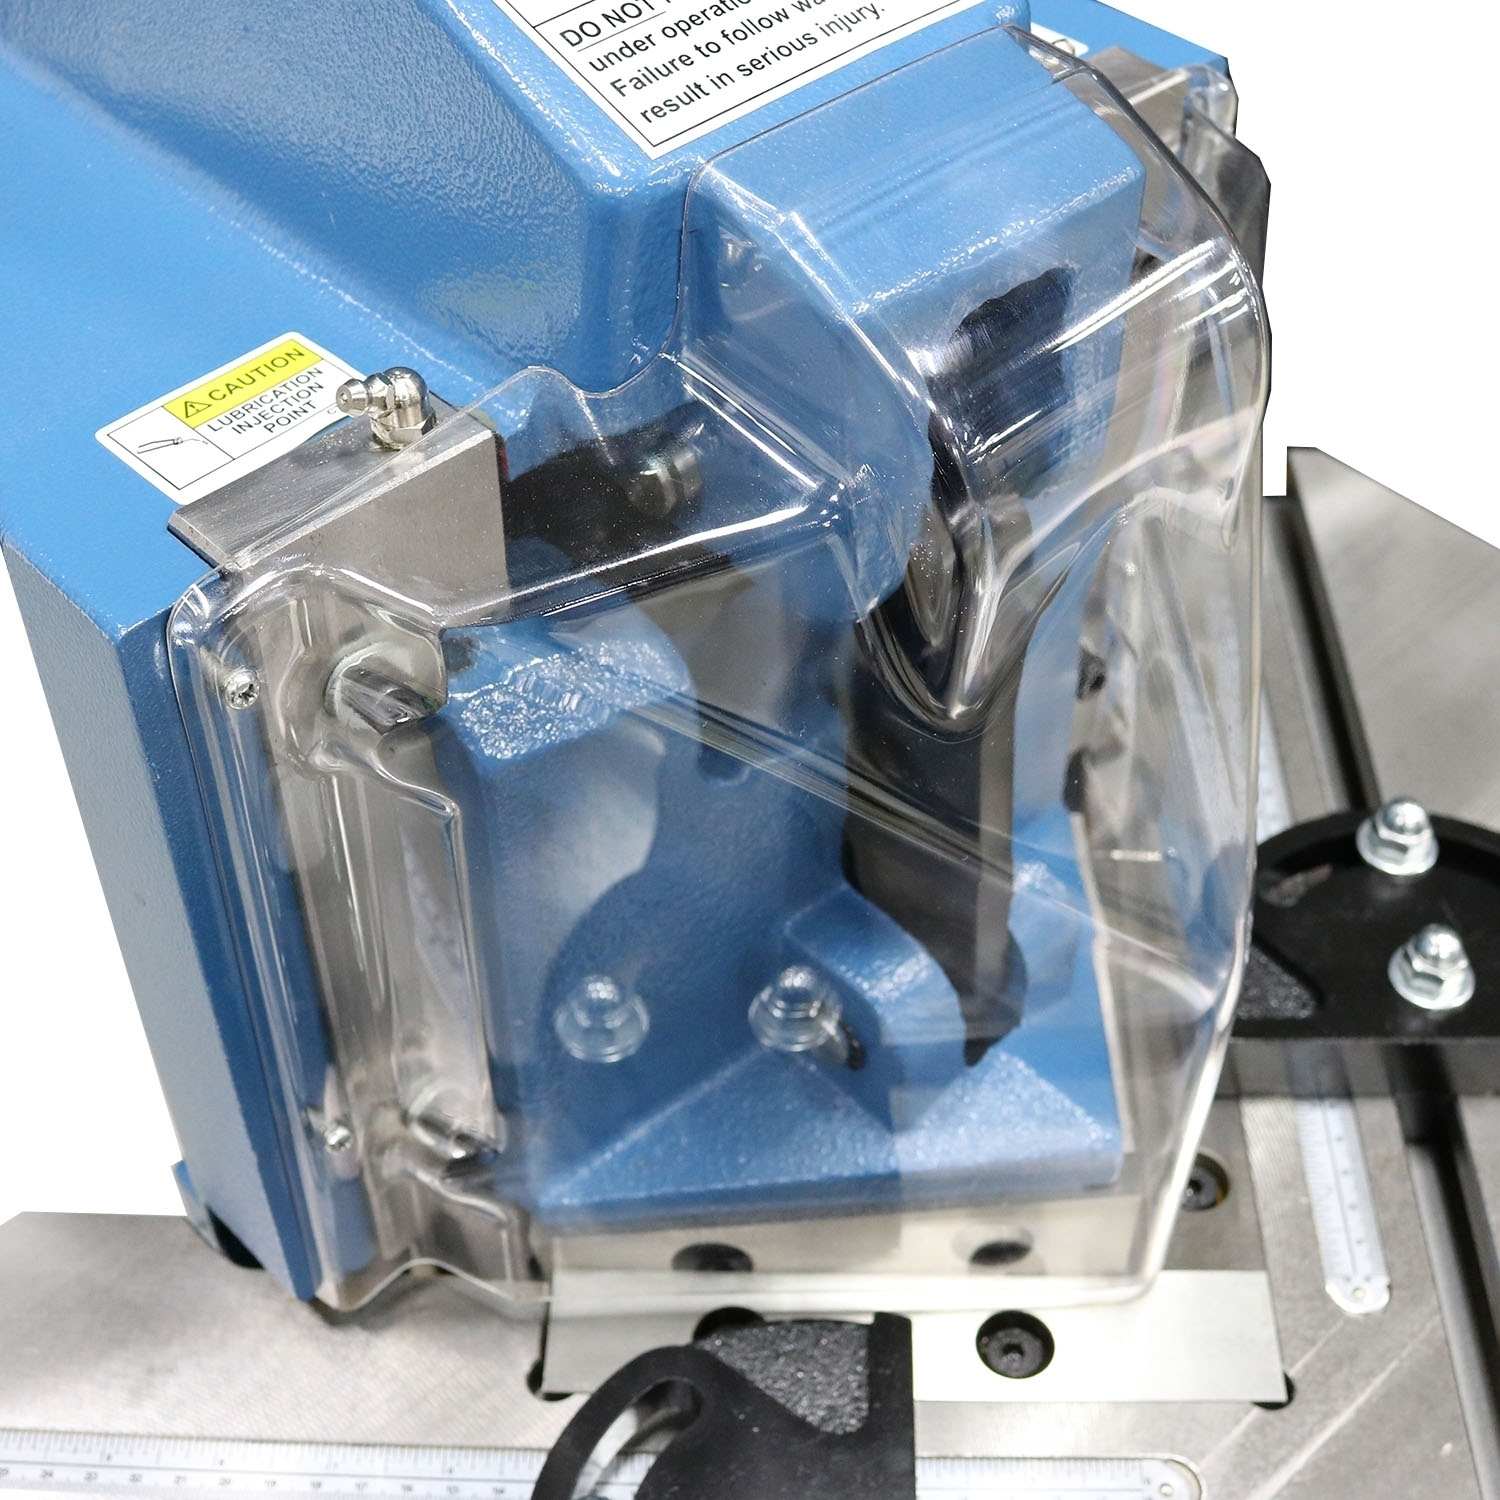 BAILEIGH SN-F11-AN Notching Machines | Pacific Machine Tools LLC